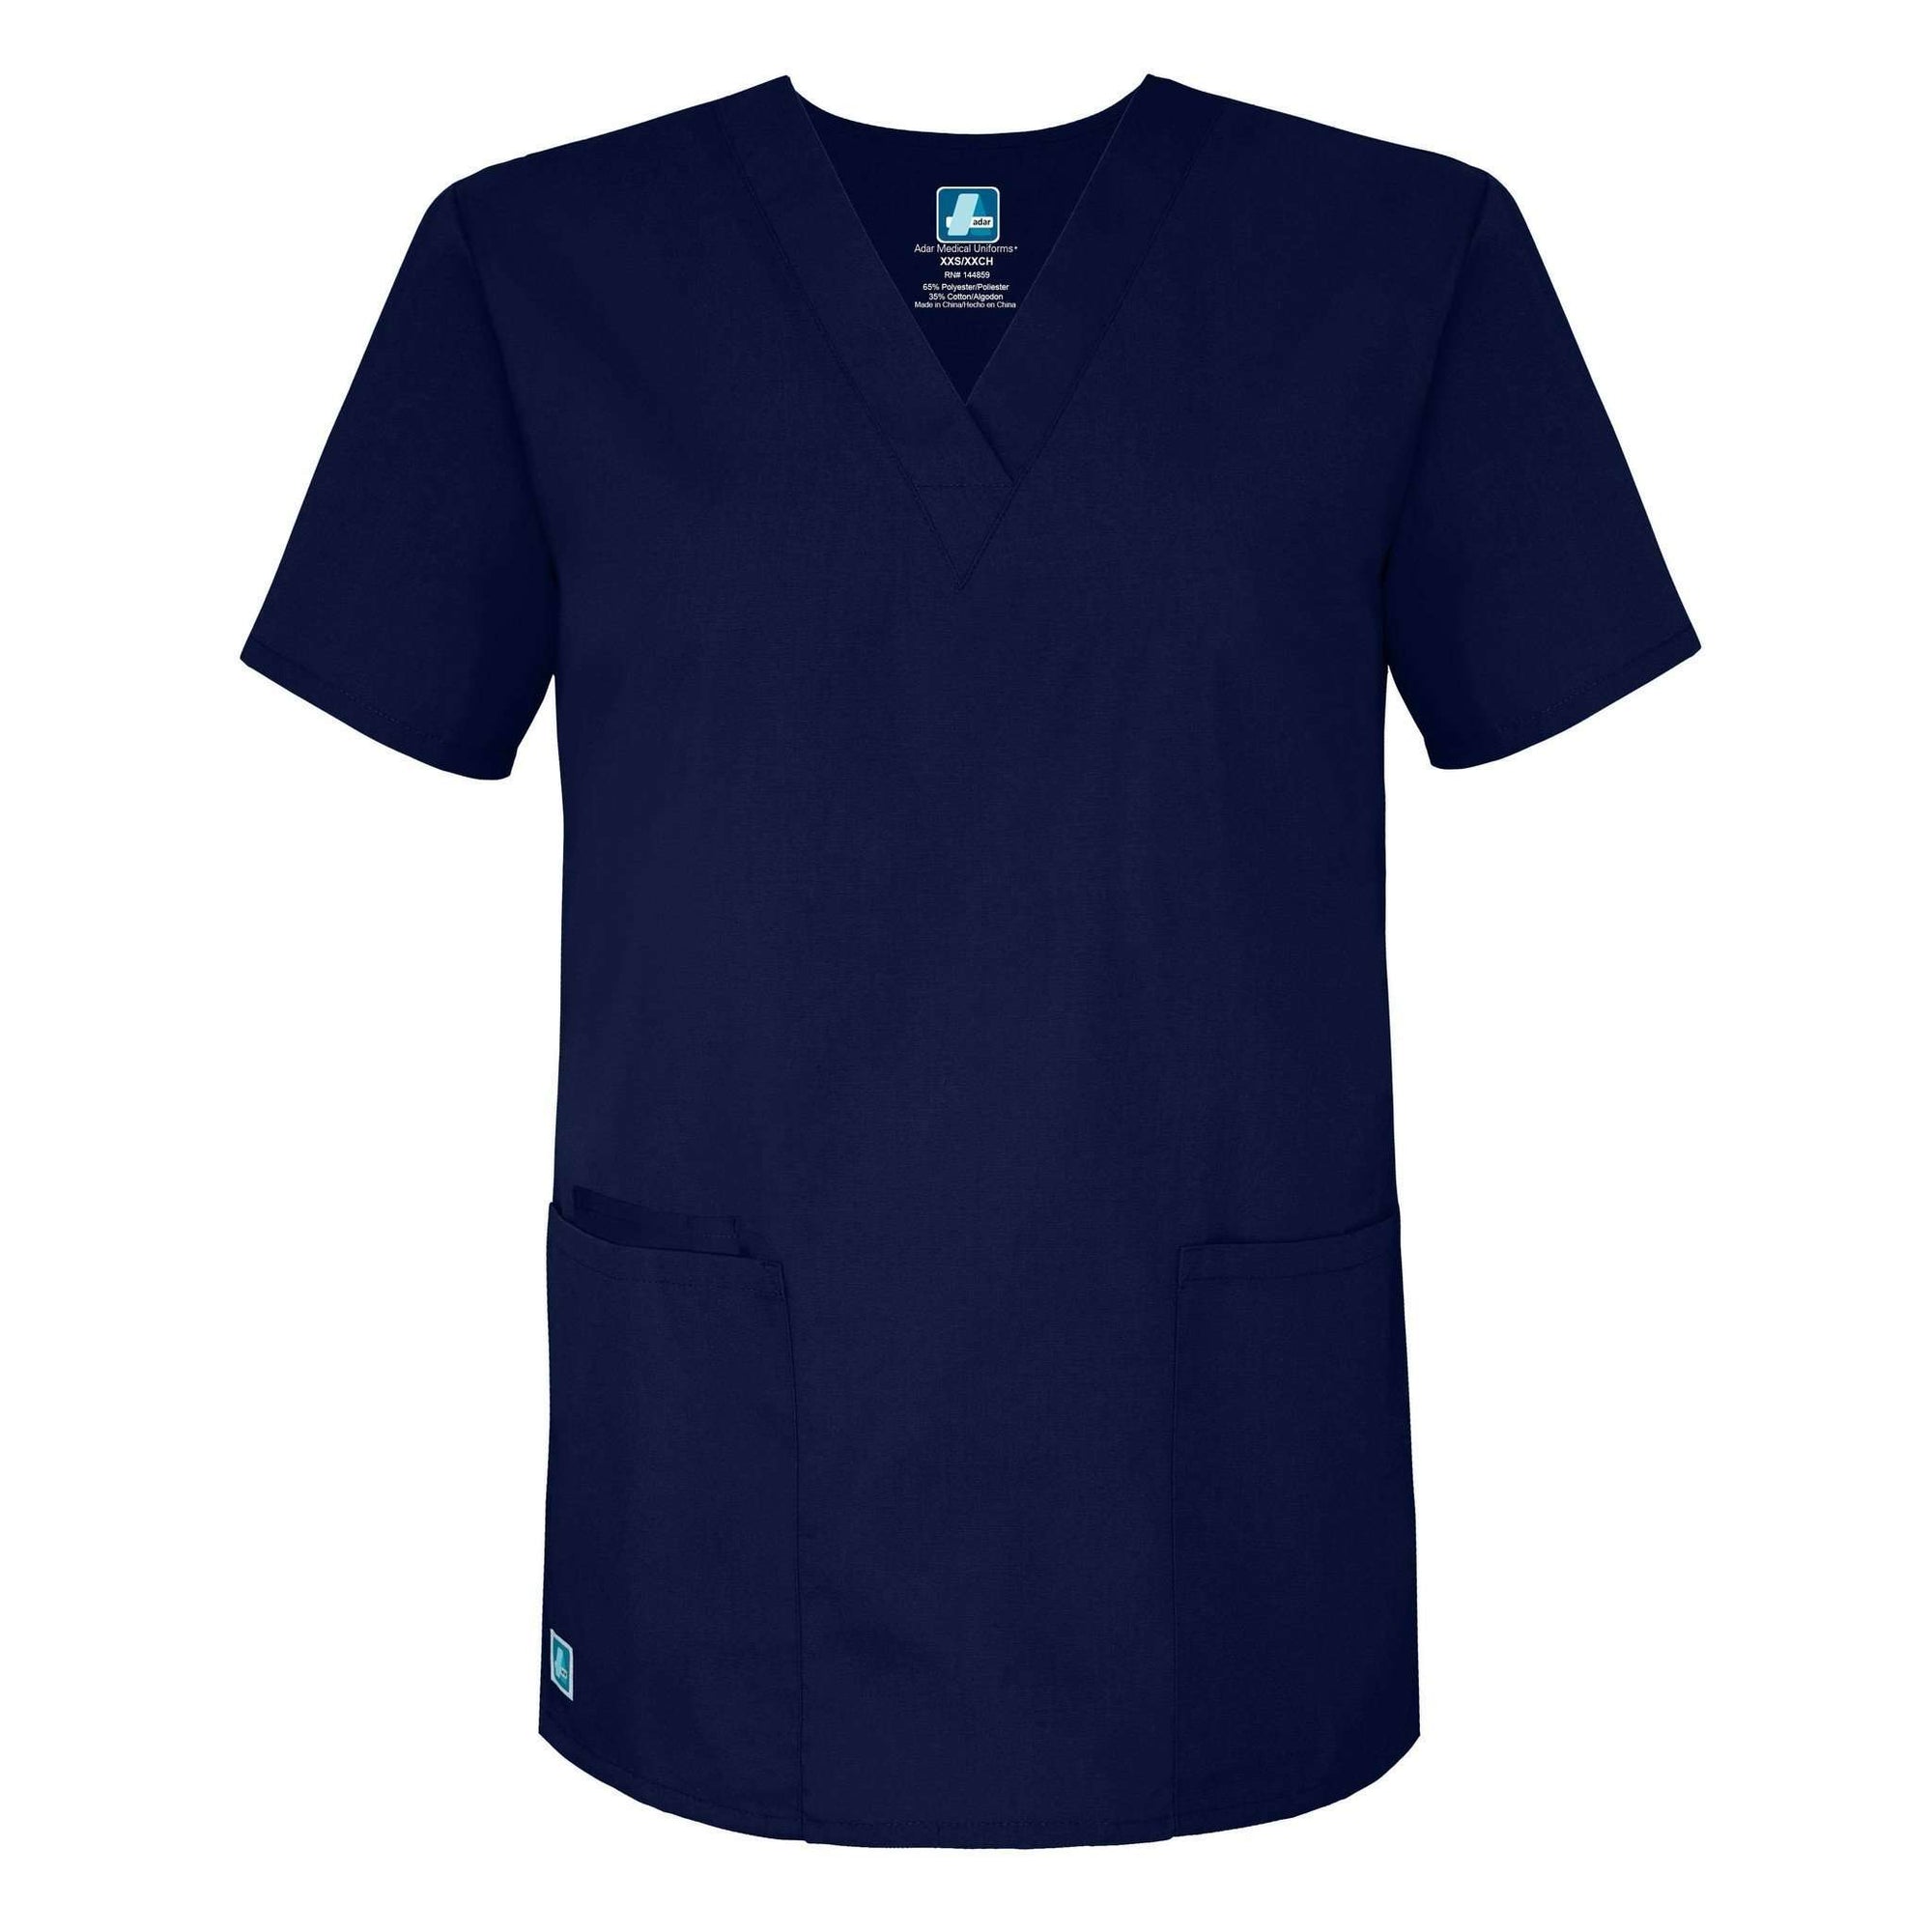  Adar - uniforms Medical Uniform Tops uniforms online Adar Universal Unisex V-Neck 2 Pocket Scrub Top Navy S - SchoolUniforms.com